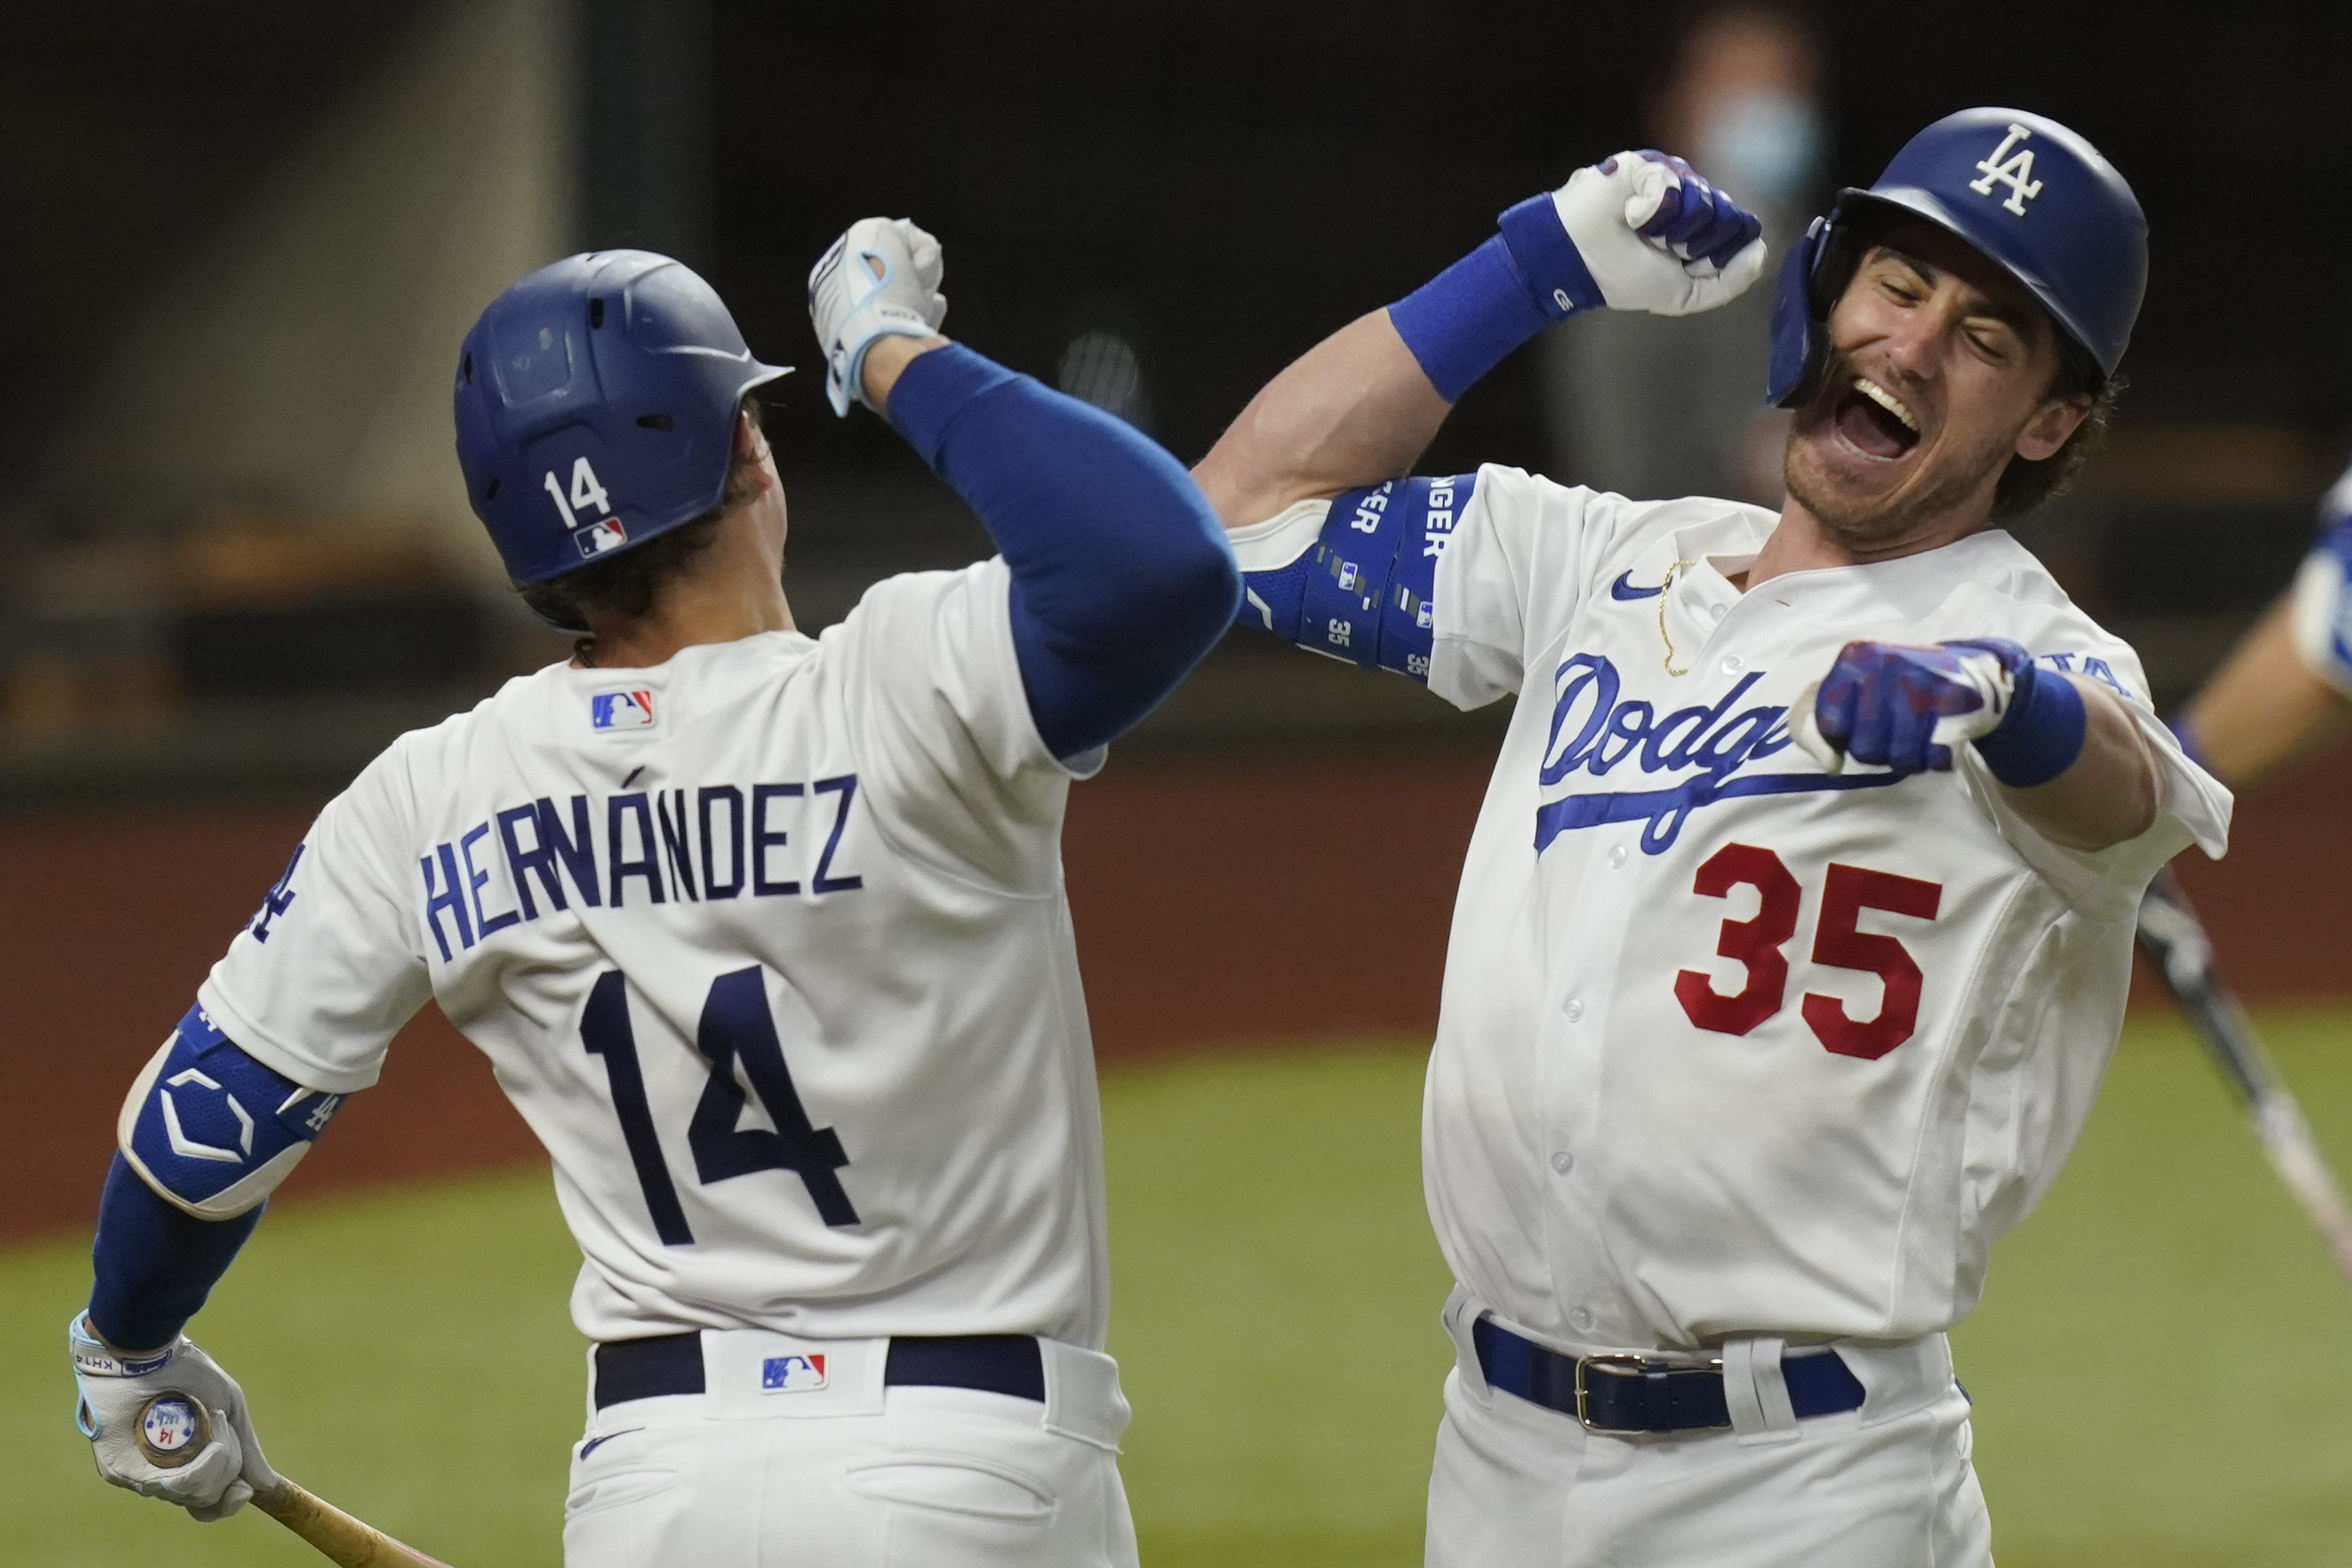 Dodgers' Cody Bellinger dislocates shoulder while celebrating